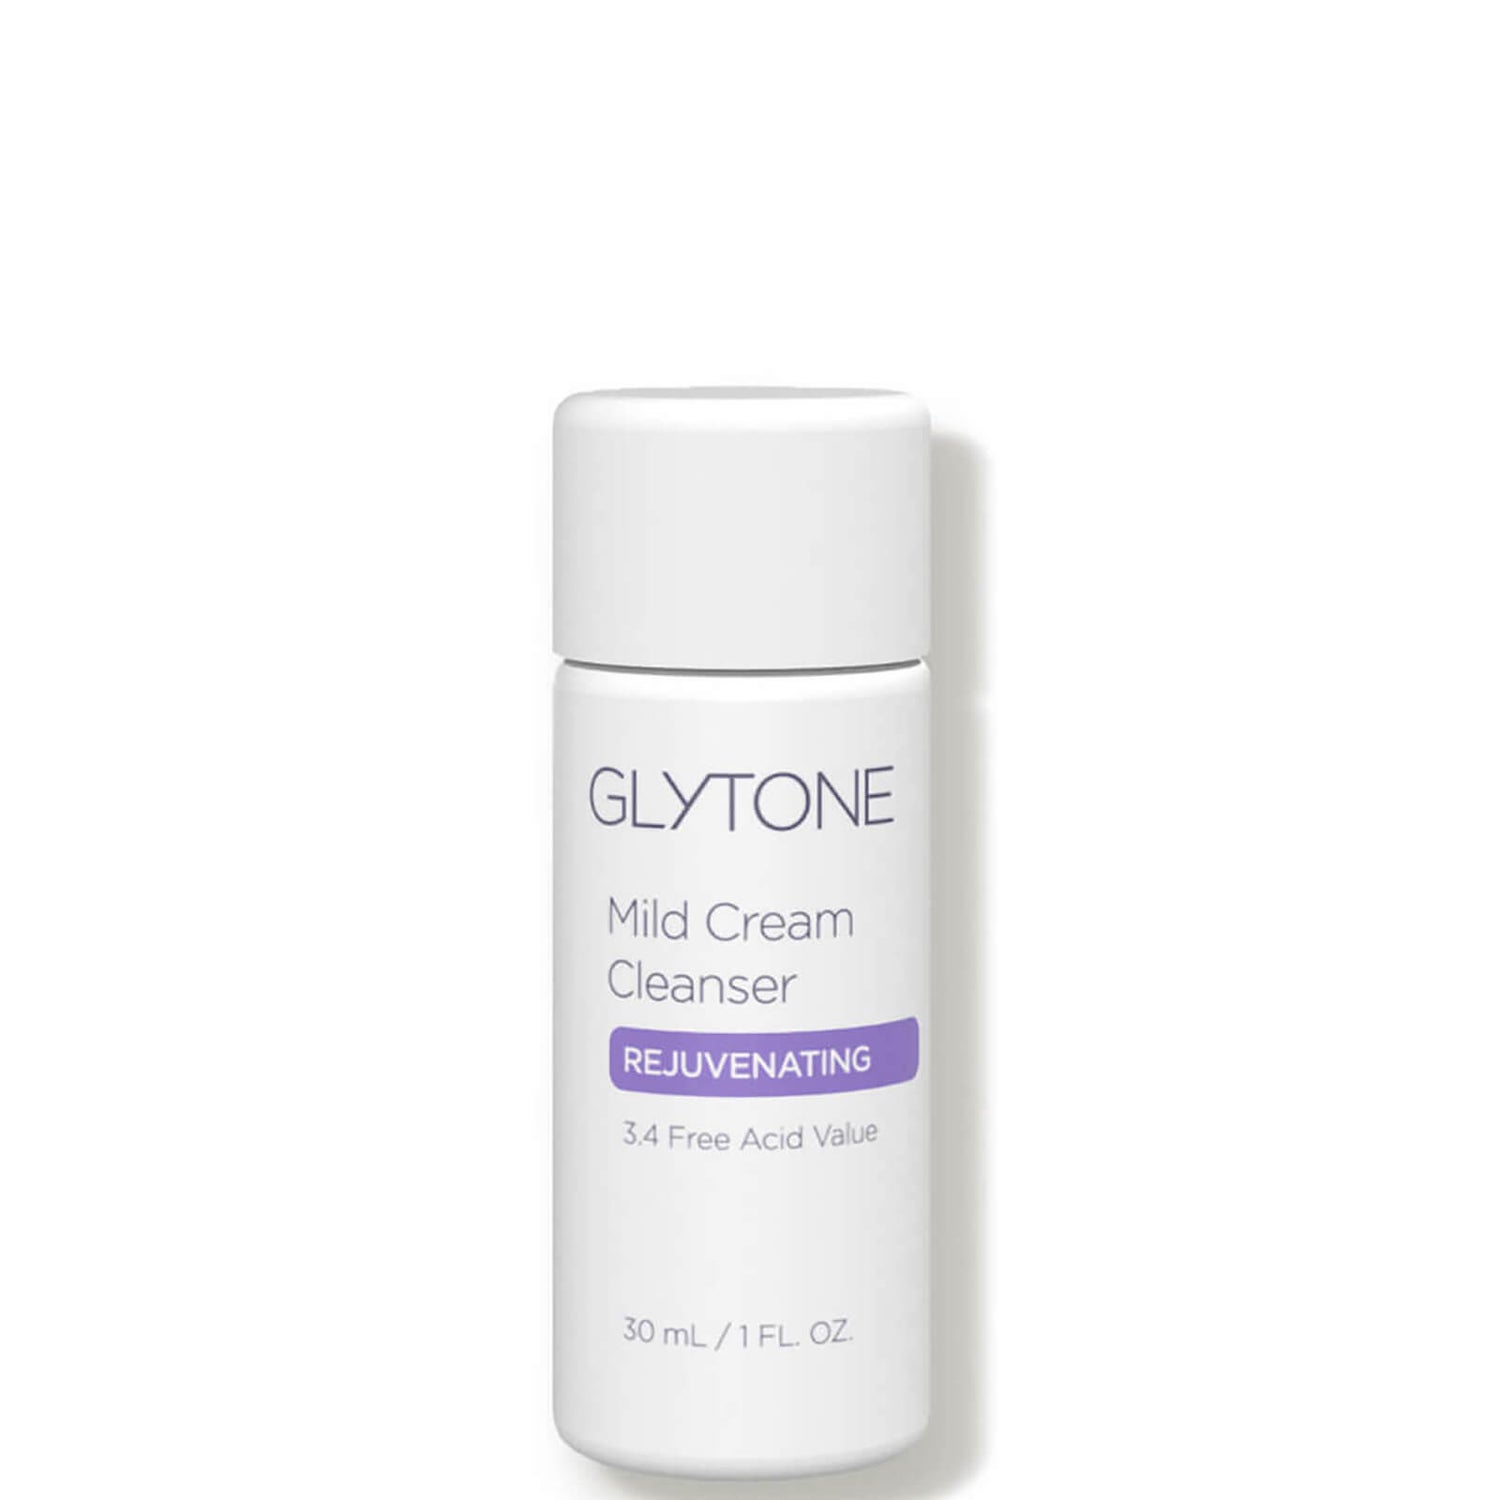 Glytone Mild Cream Cleanser 1 oz